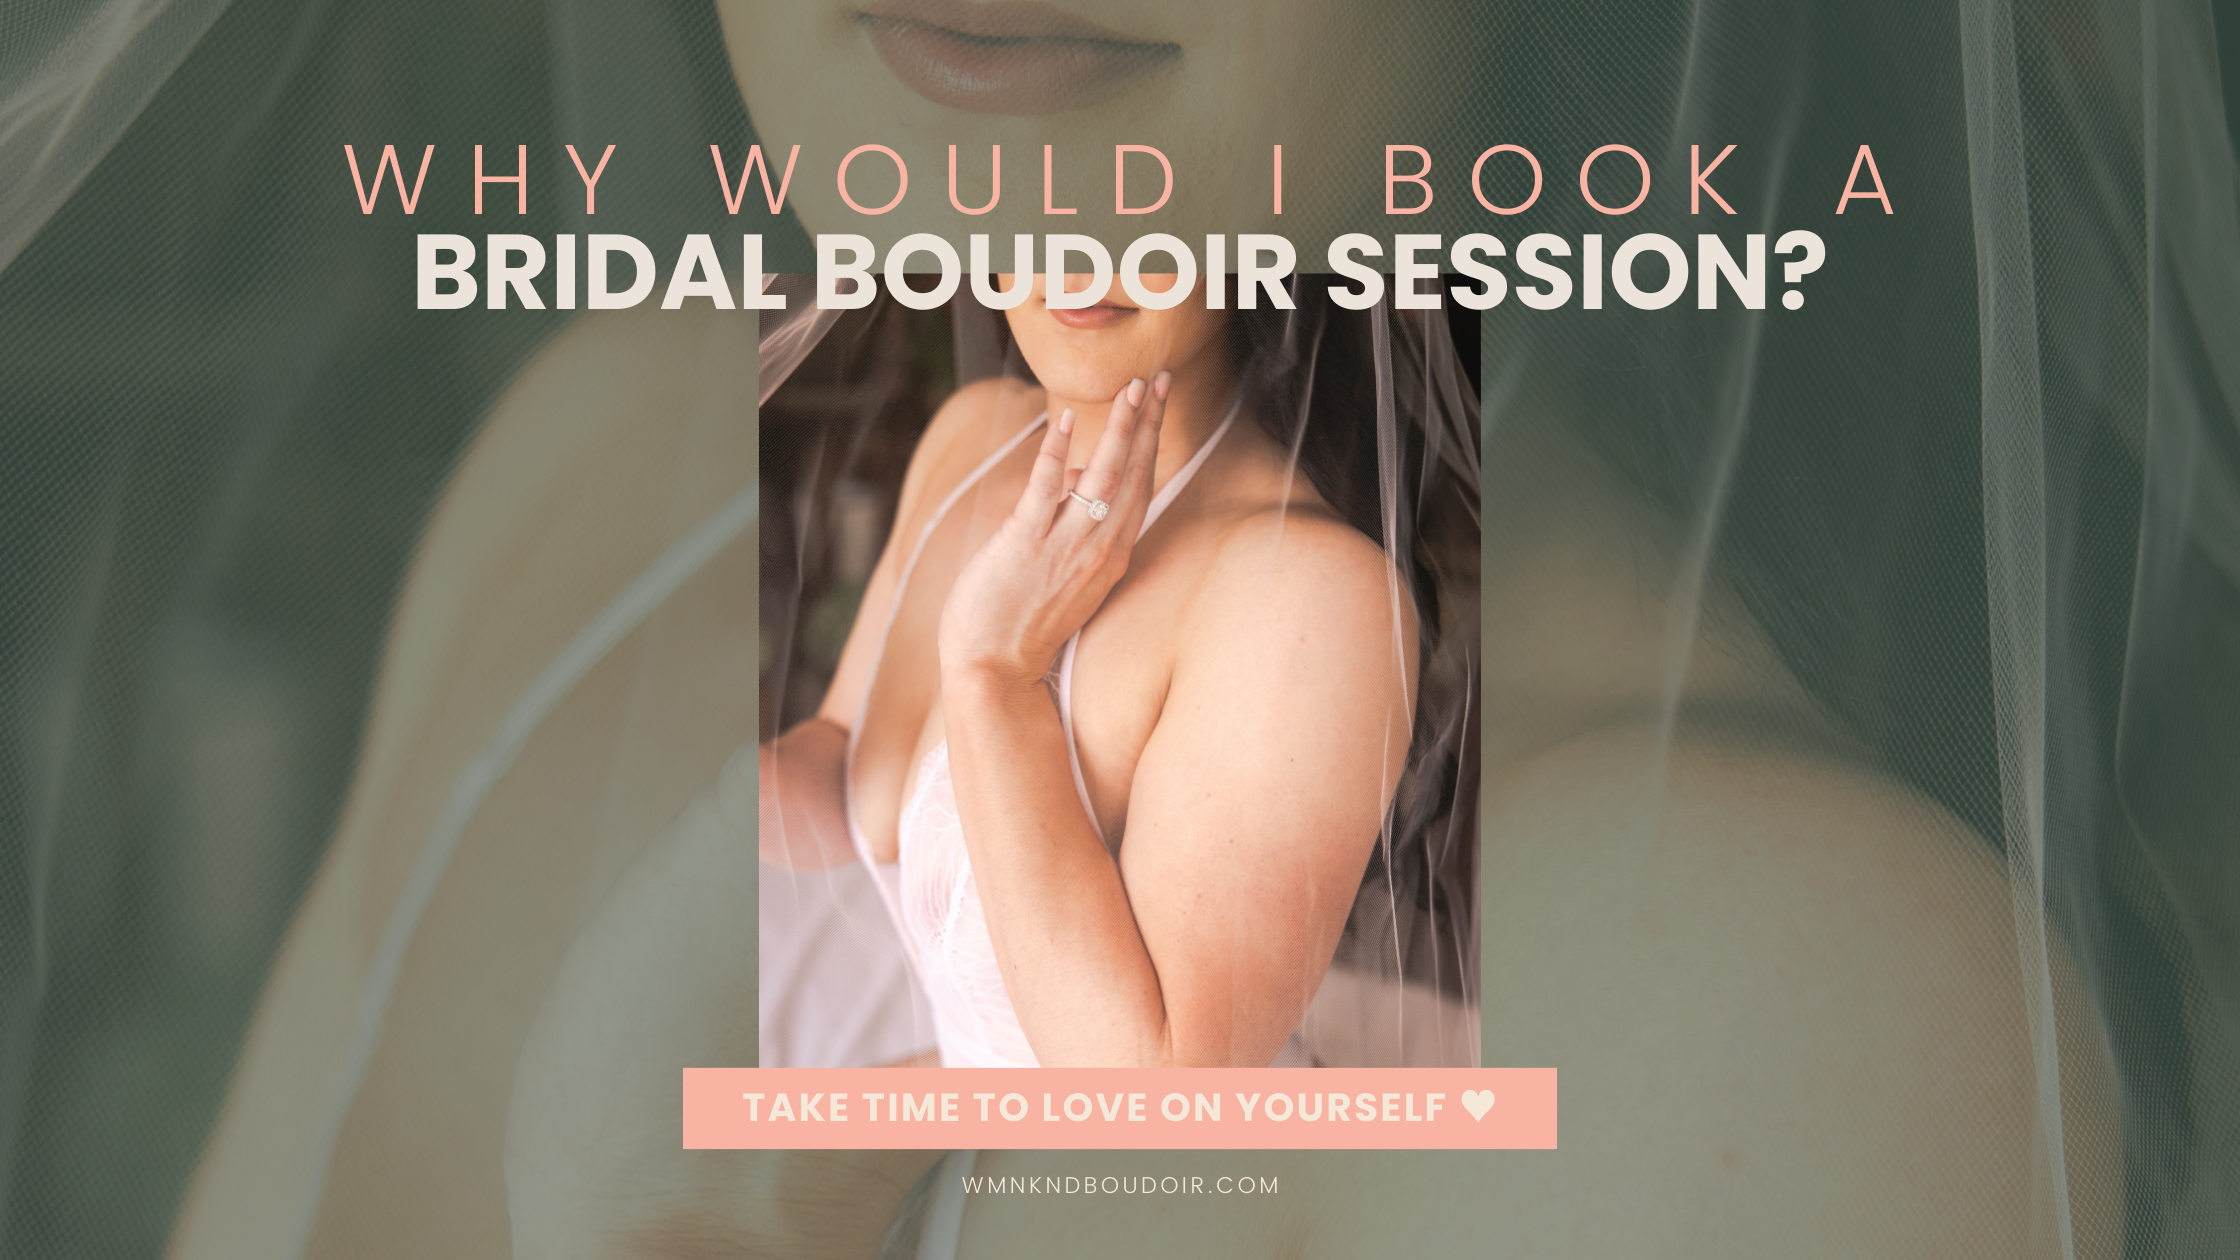 Bridal boudoir session from WMNKND BOUDOIR IN kANSAS cITY, mISSOURI